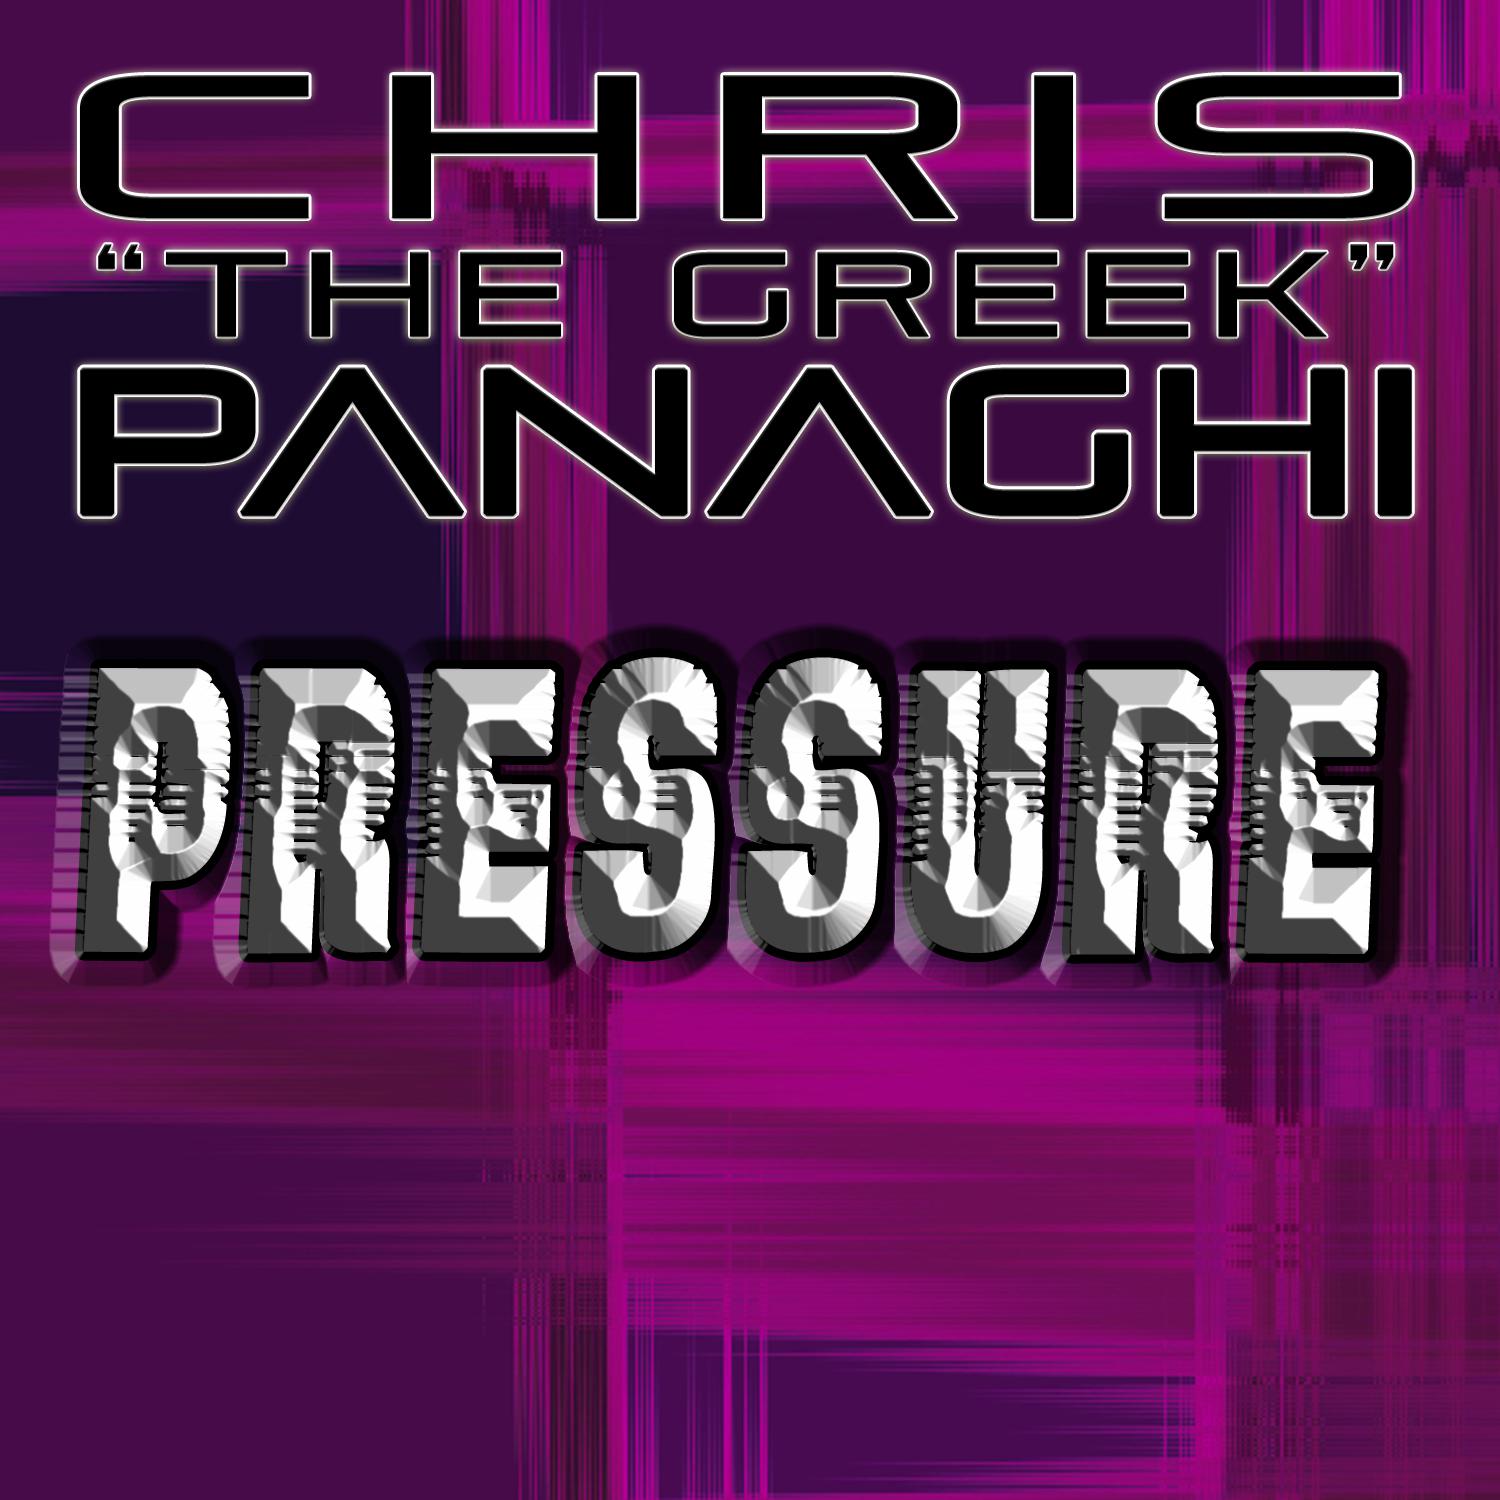 Pressure (DJG Drumz)